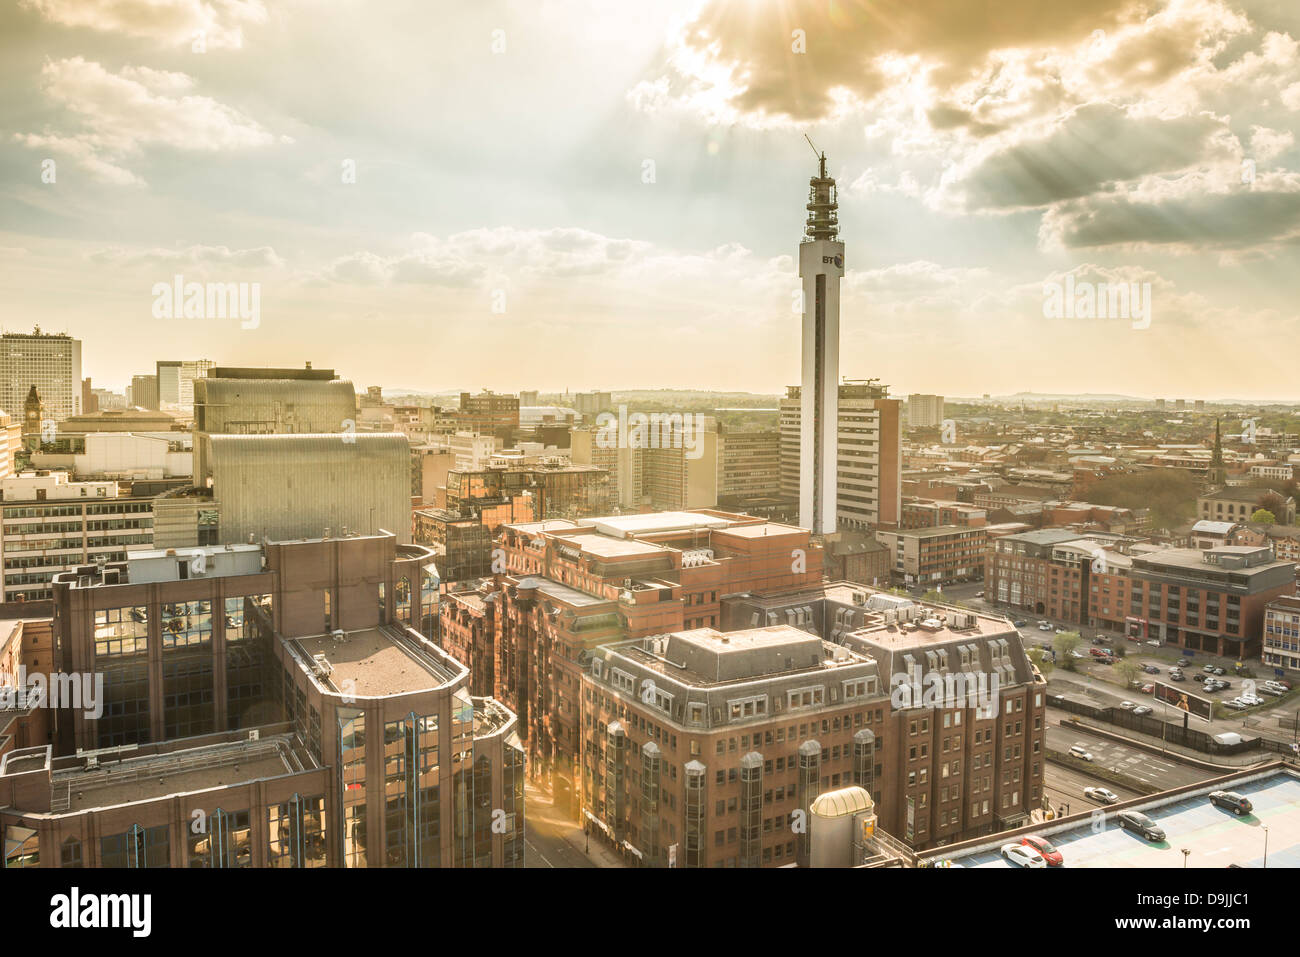 The city centre of Birmingham, West Midlands, England, UK. Stock Photo